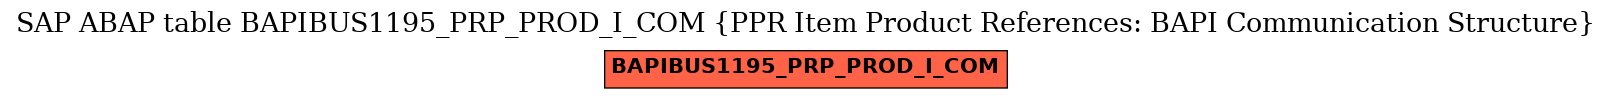 E-R Diagram for table BAPIBUS1195_PRP_PROD_I_COM (PPR Item Product References: BAPI Communication Structure)